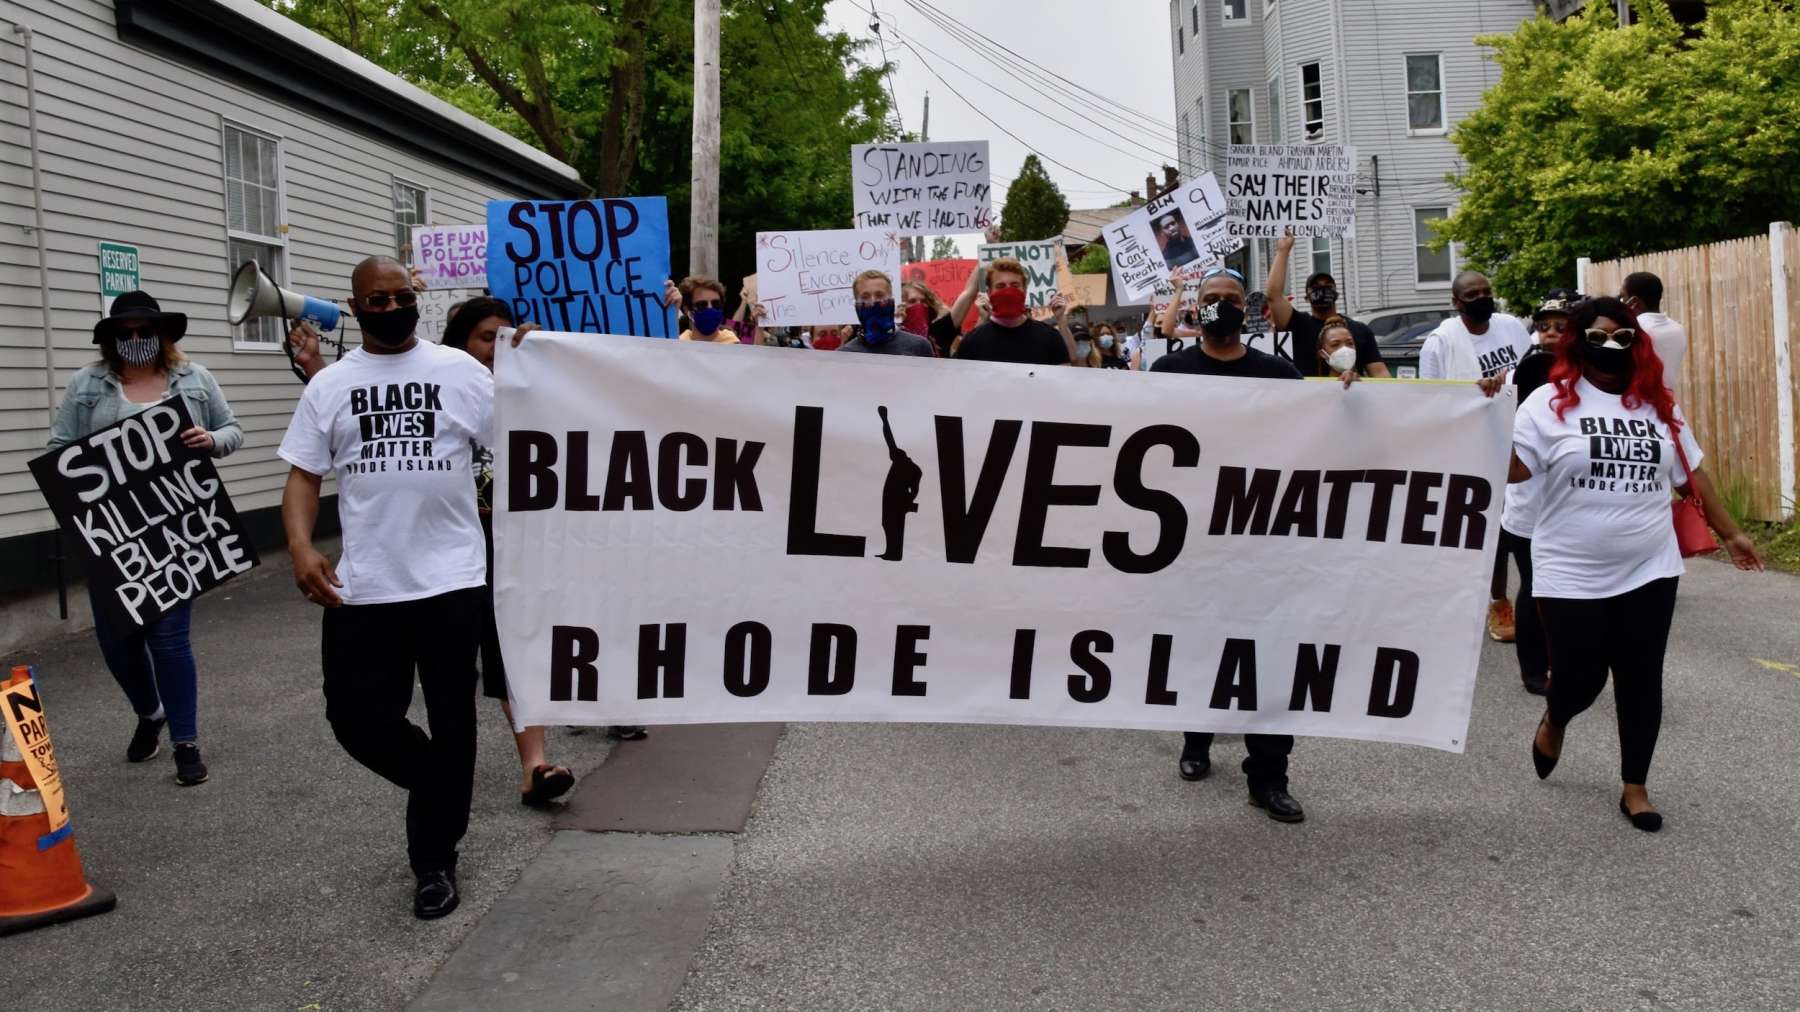 Rhode Island News: Black Lives Matter RI launches PAC